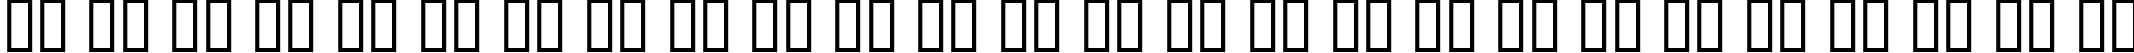 Пример написания английского алфавита шрифтом Chibola Shaded